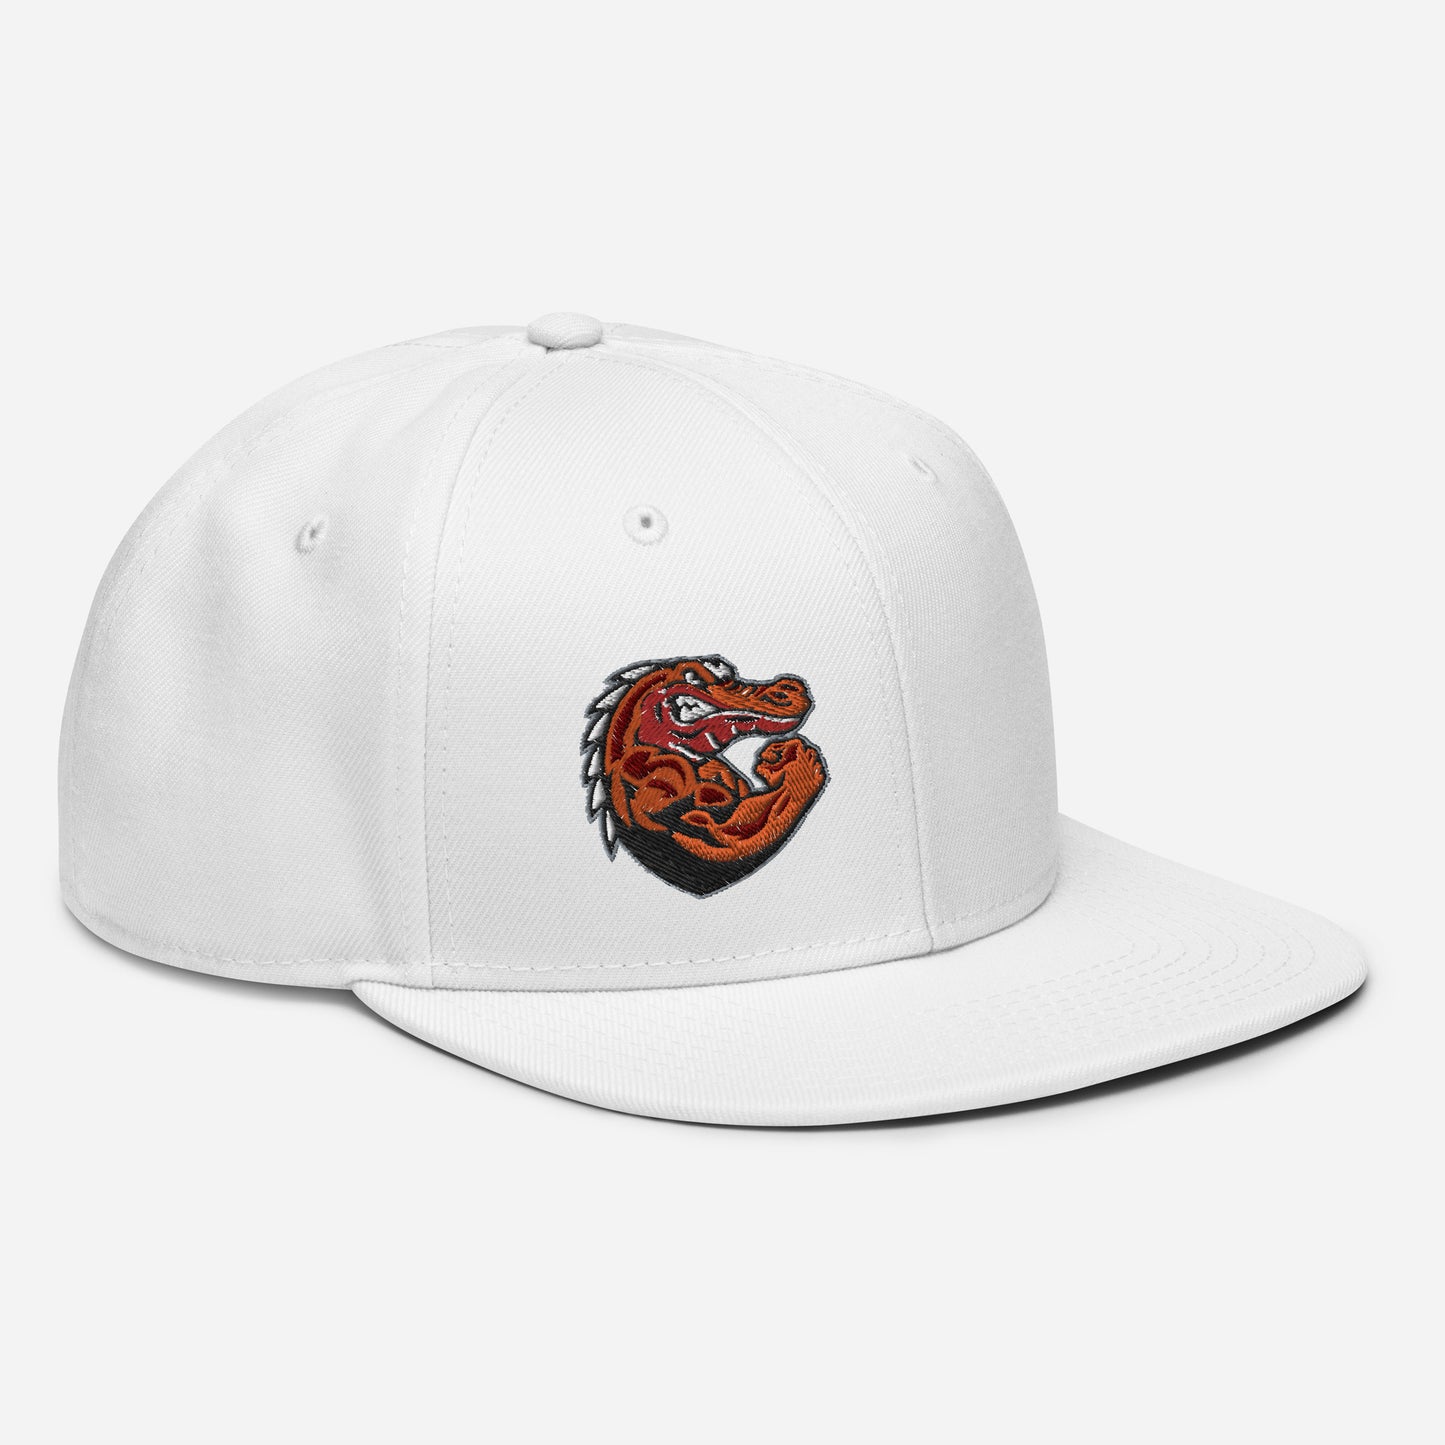 White/White Flawdawear limited Edition OG Snapback Playuz Hat